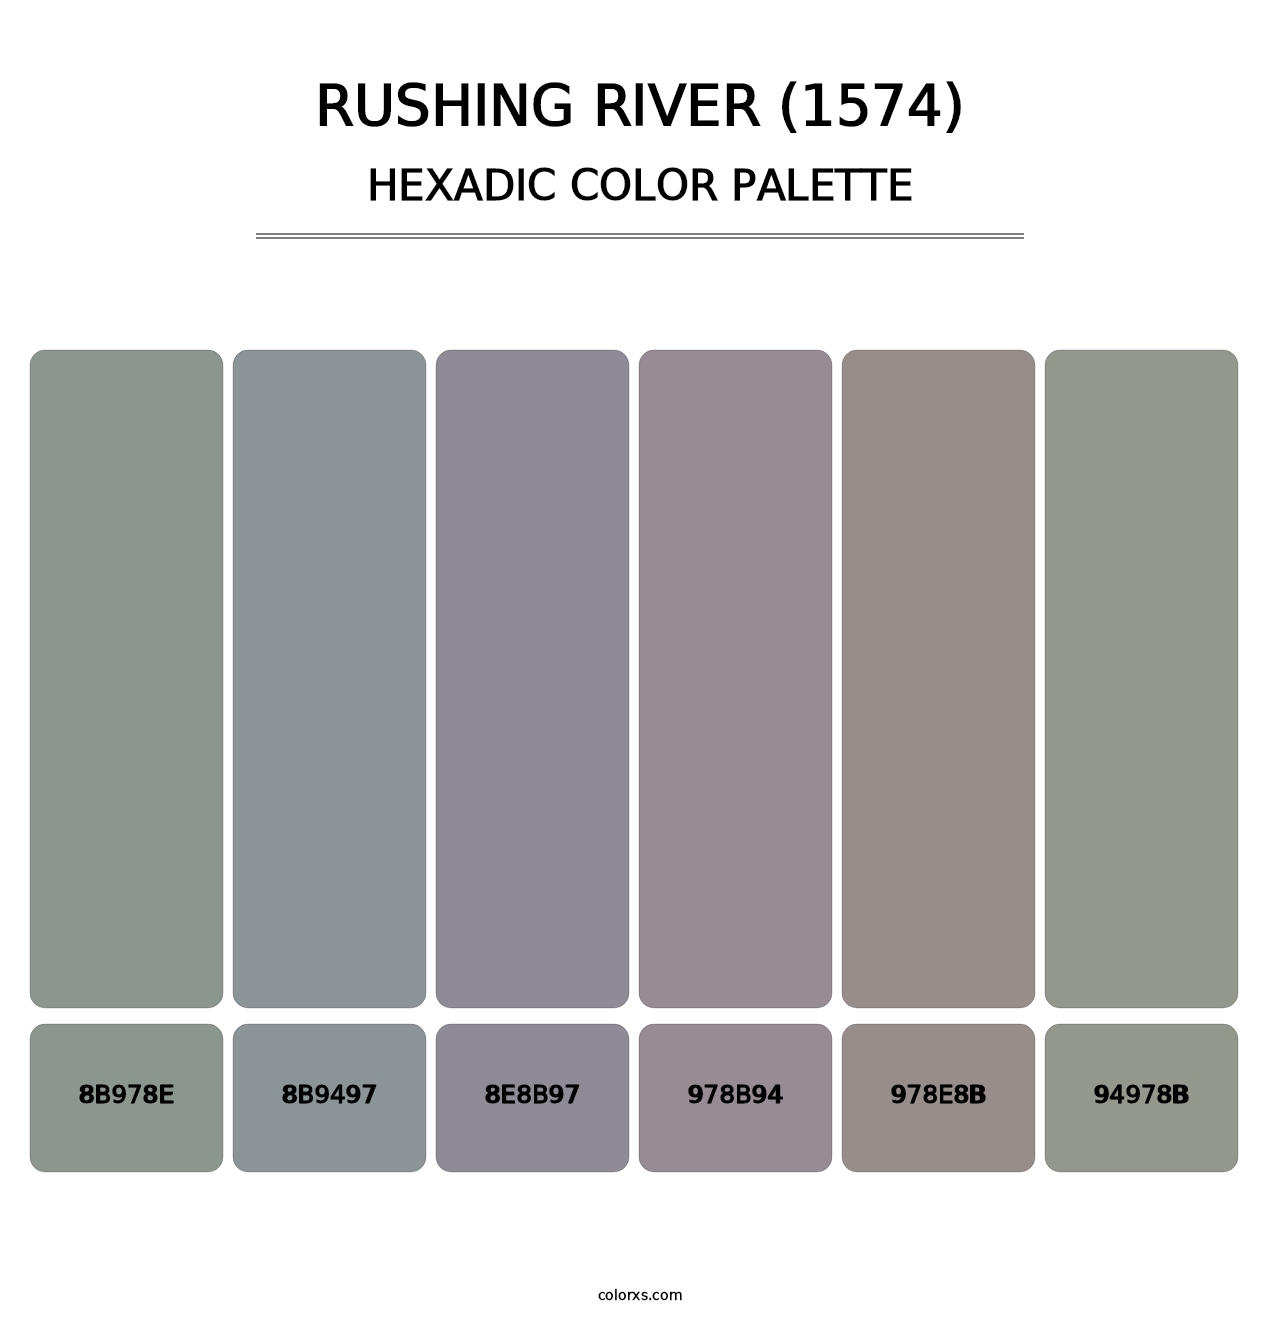 Rushing River (1574) - Hexadic Color Palette